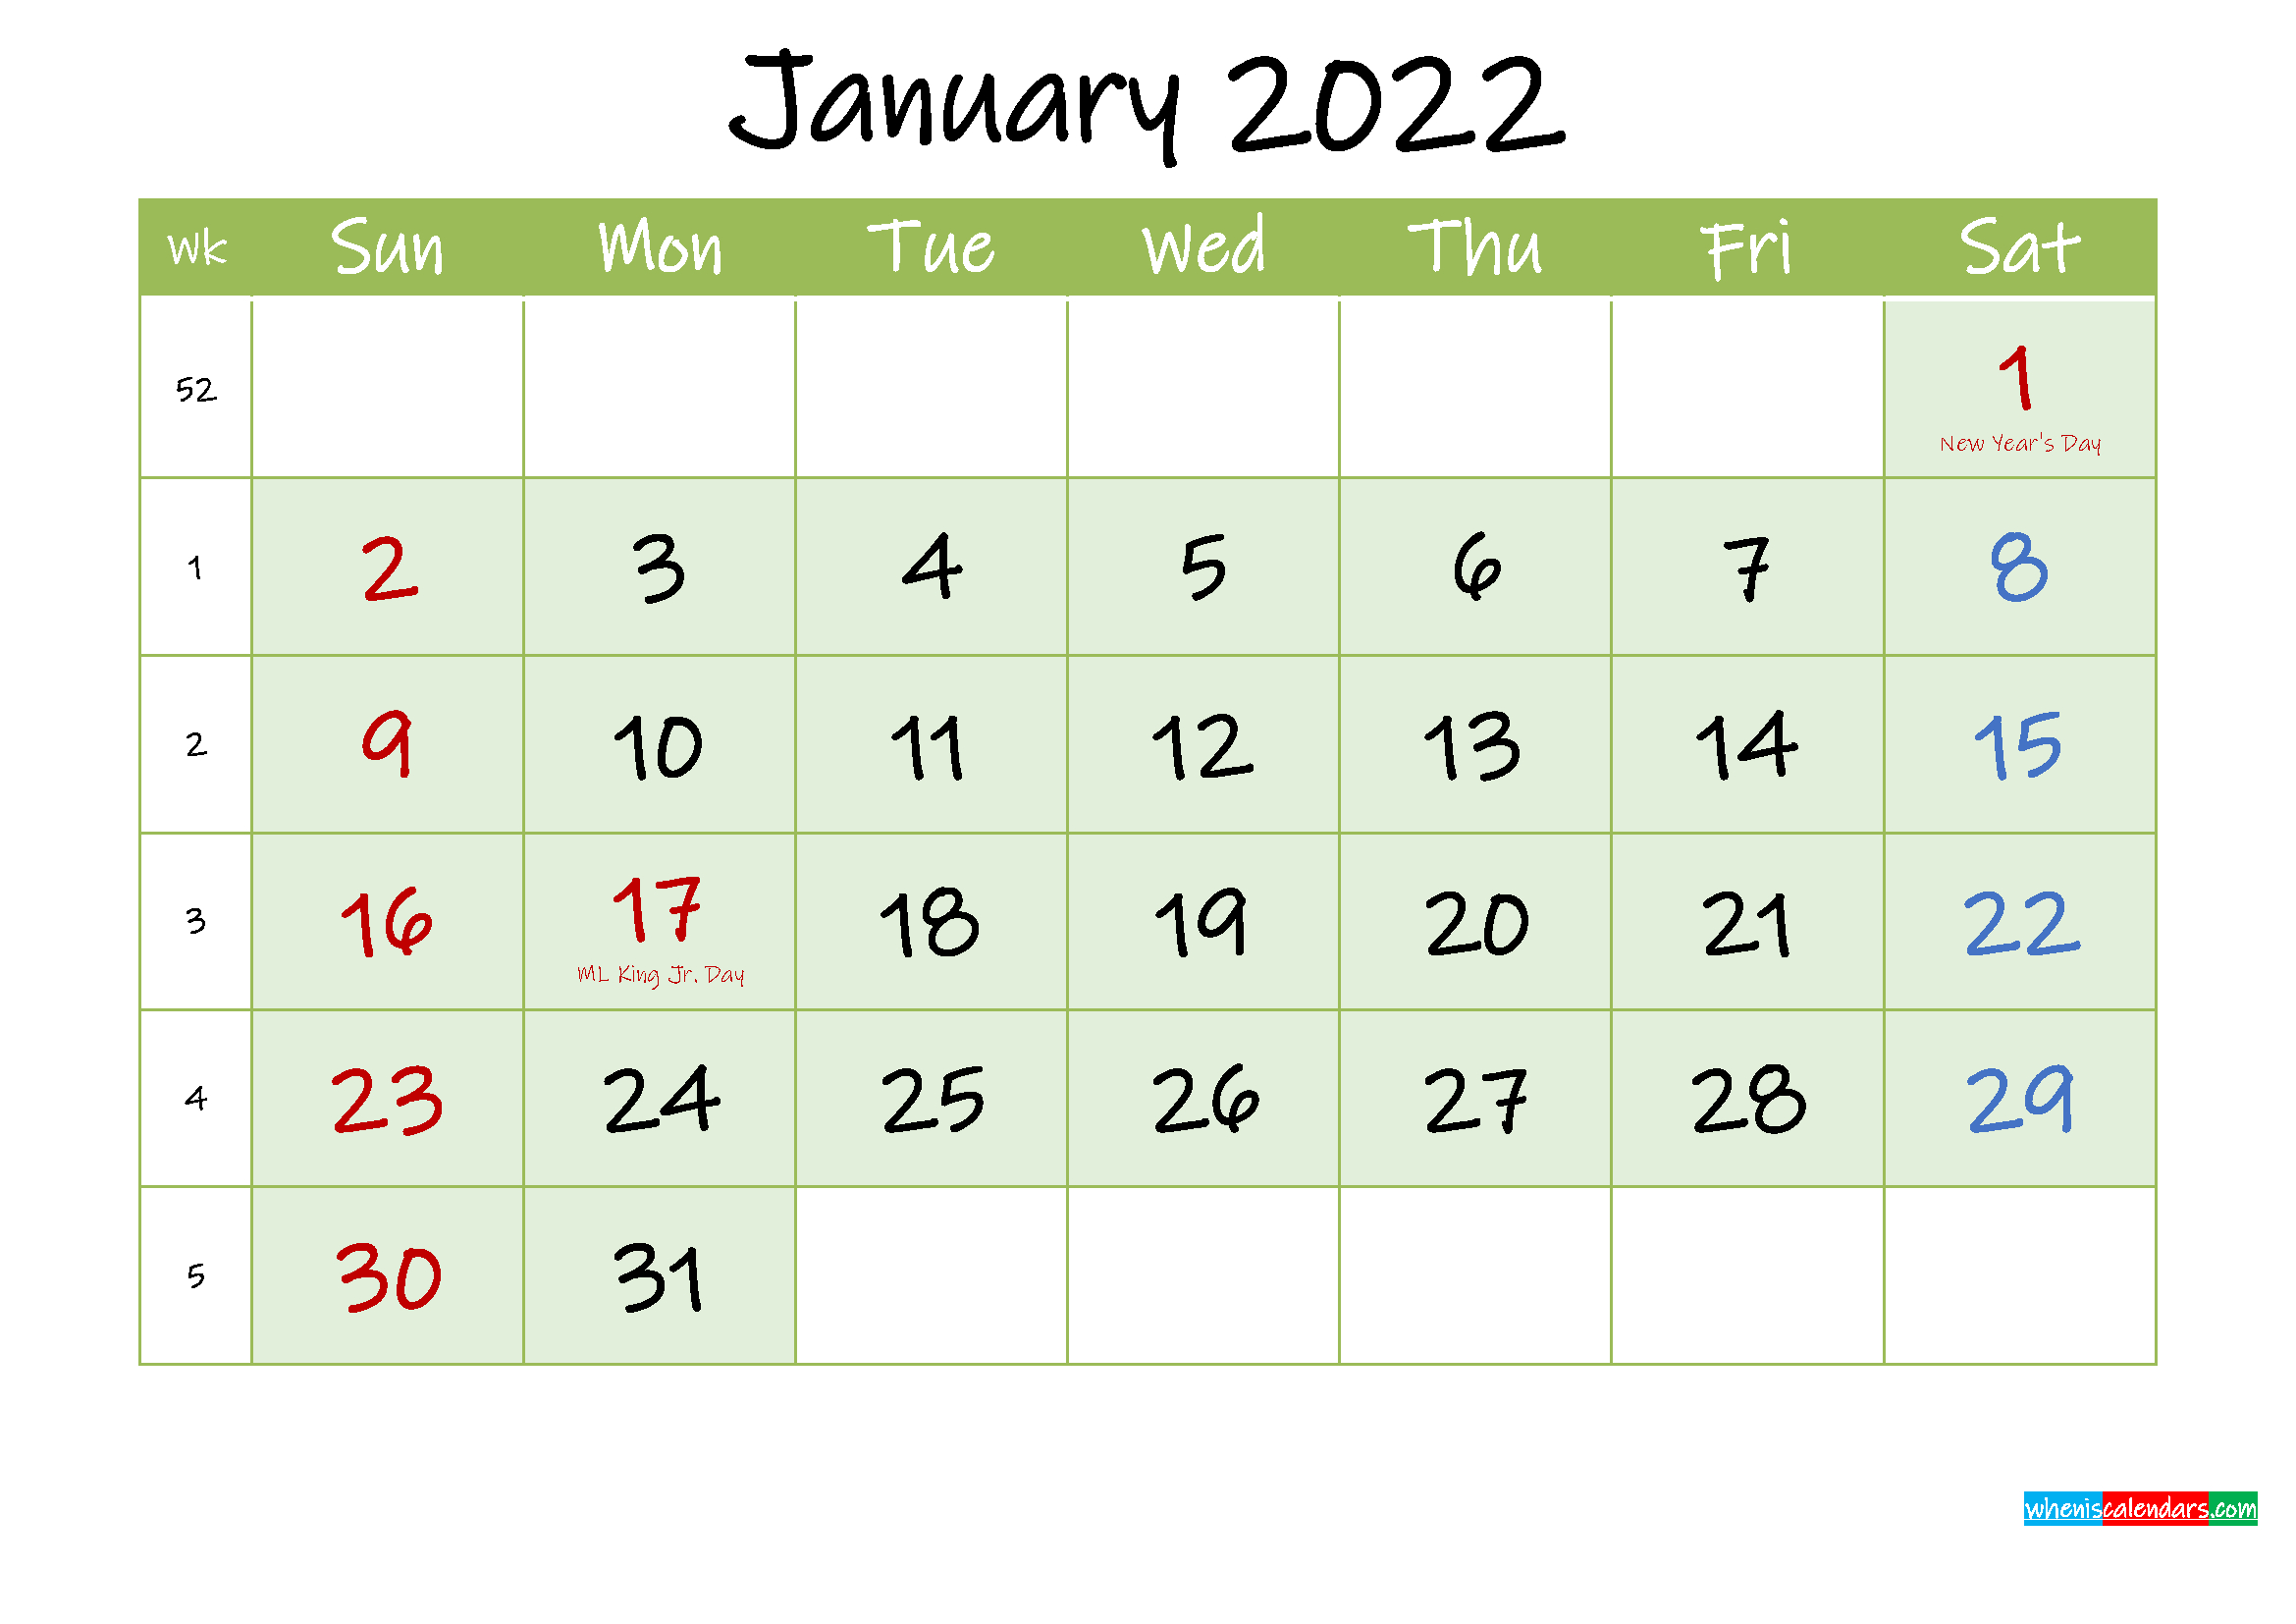 January 2022 Free Printable Calendar - Template Ink22M121